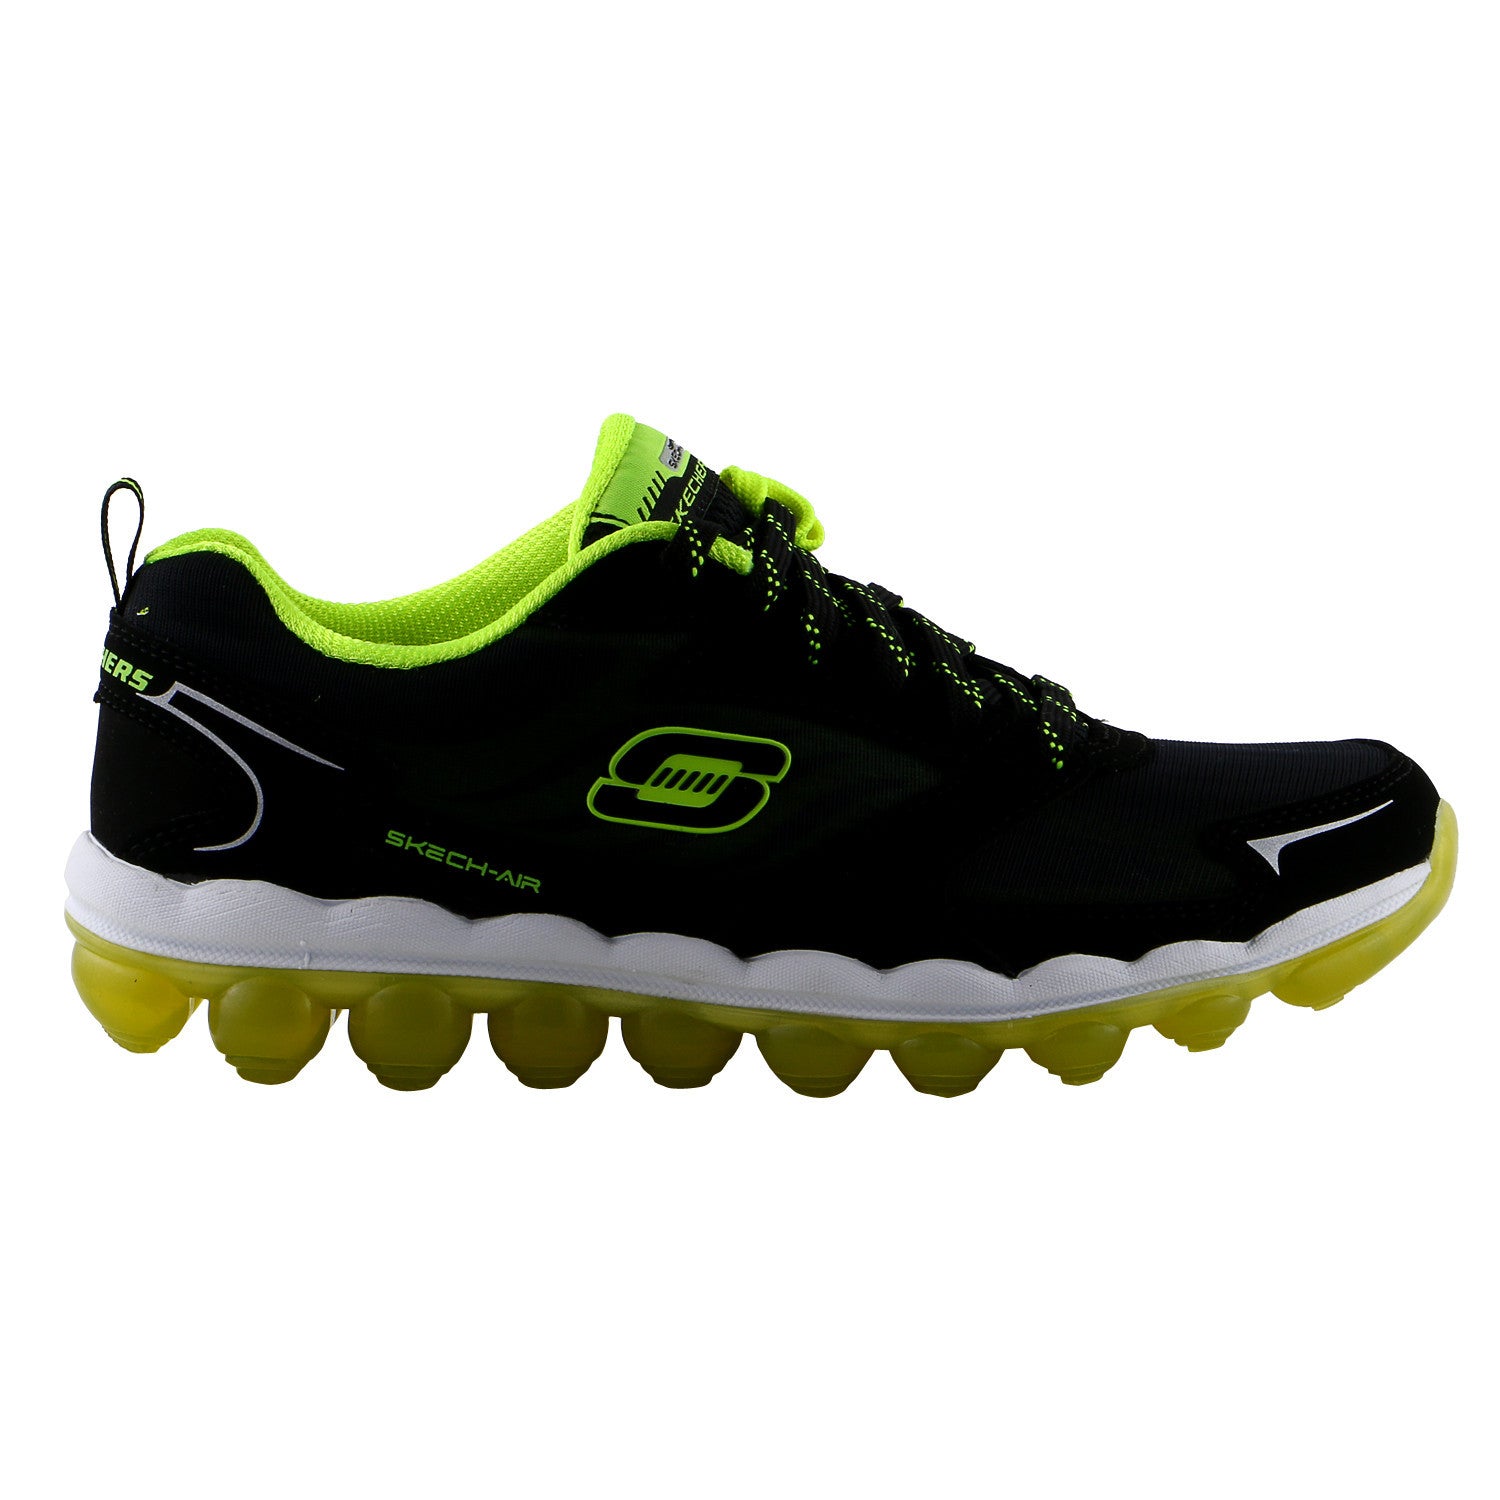 skech air running shoes